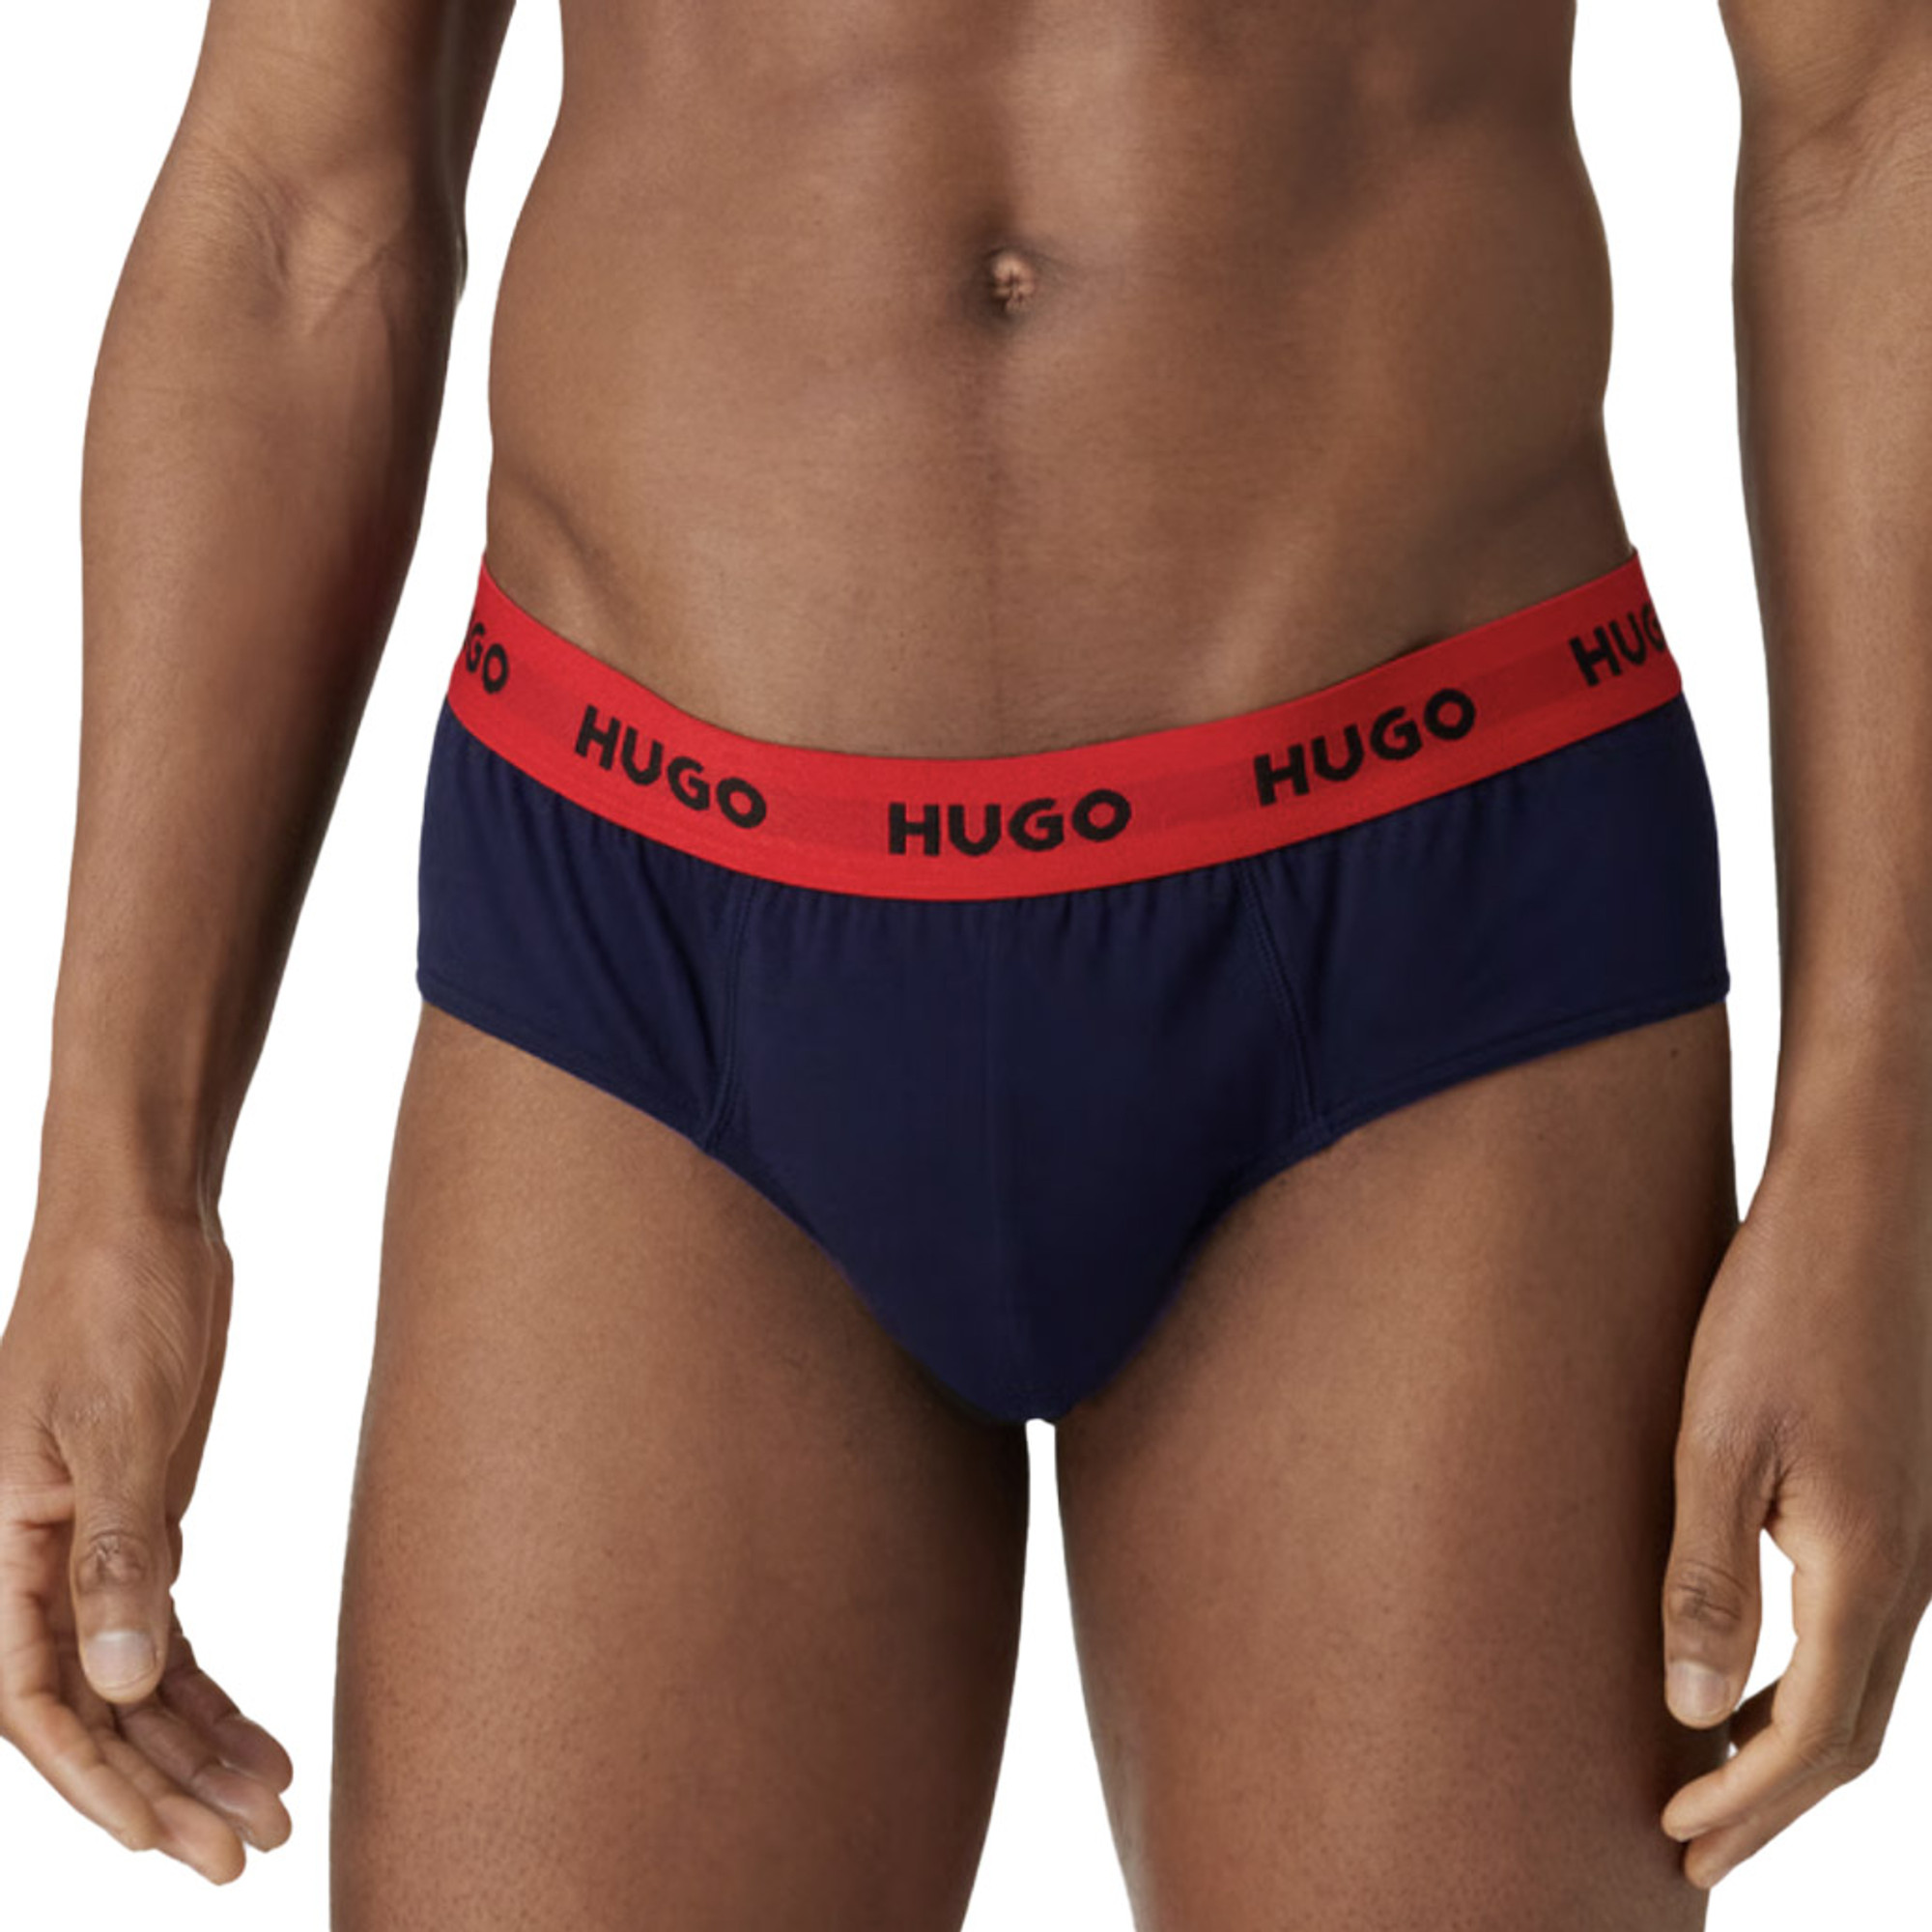 HUGO - Stretch-cotton briefs with red logo label